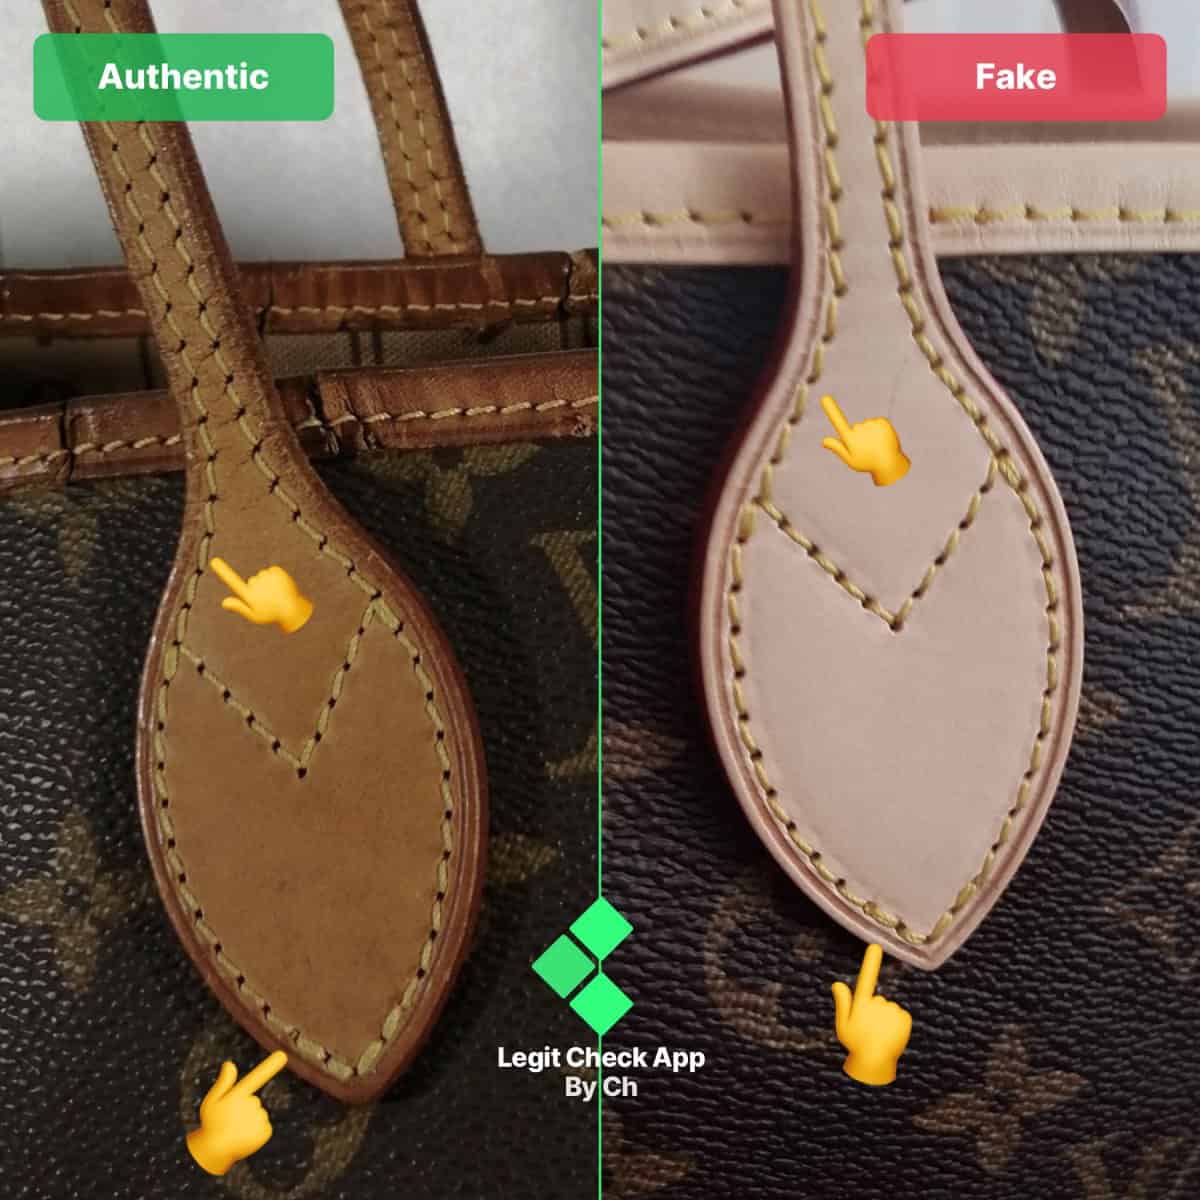 Louis Vuitton Neverfull MM Real Vs Fake Bag Comparison - Legit Check By Ch